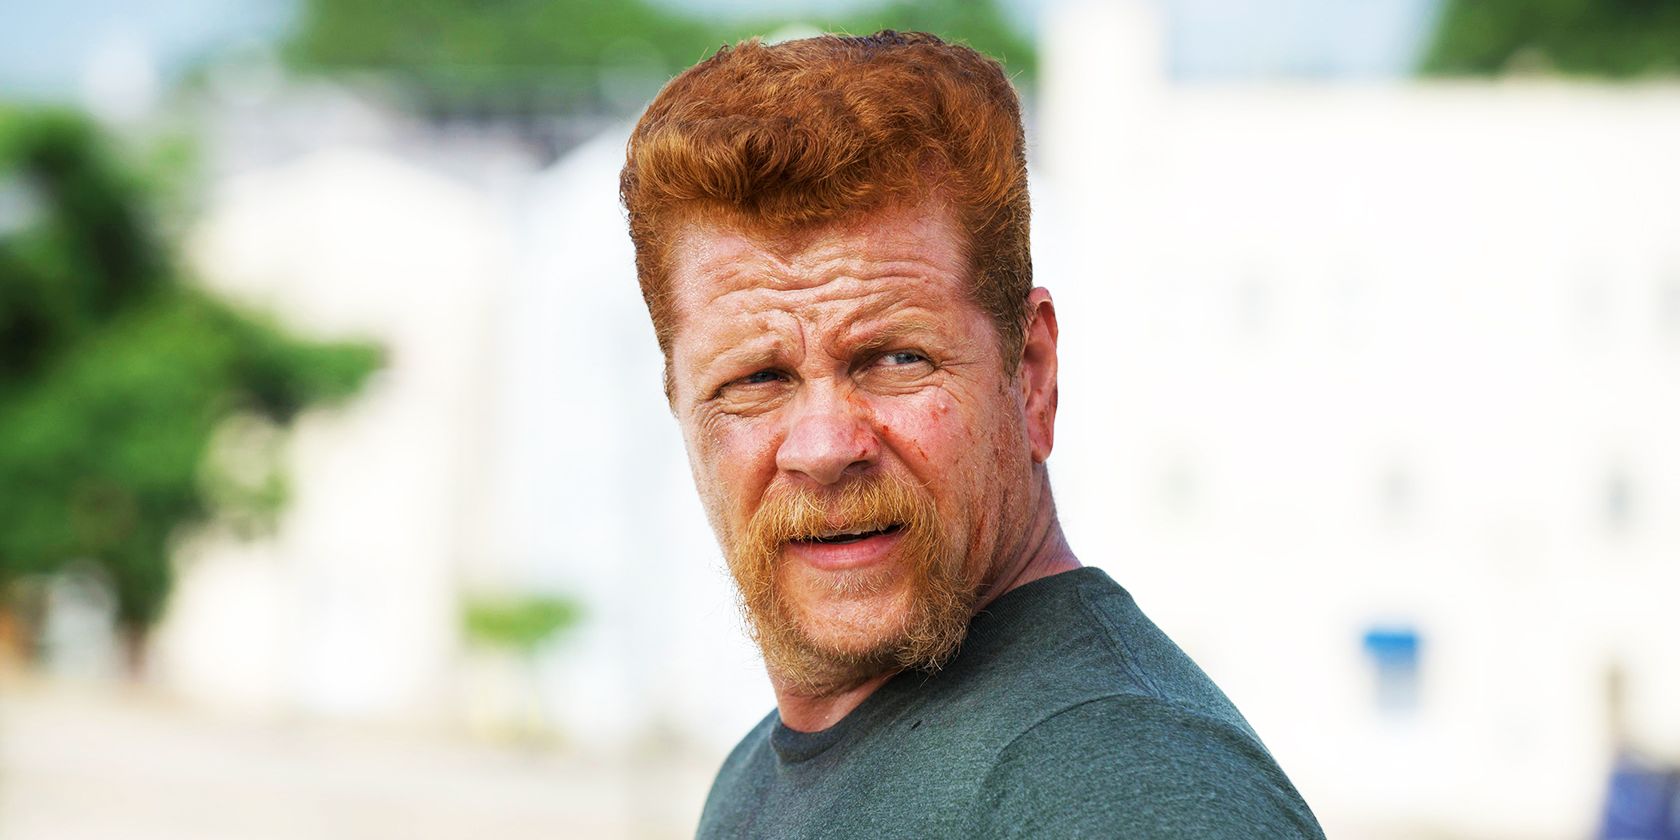 Michael Cudlitz as Abraham in The Walking Dead